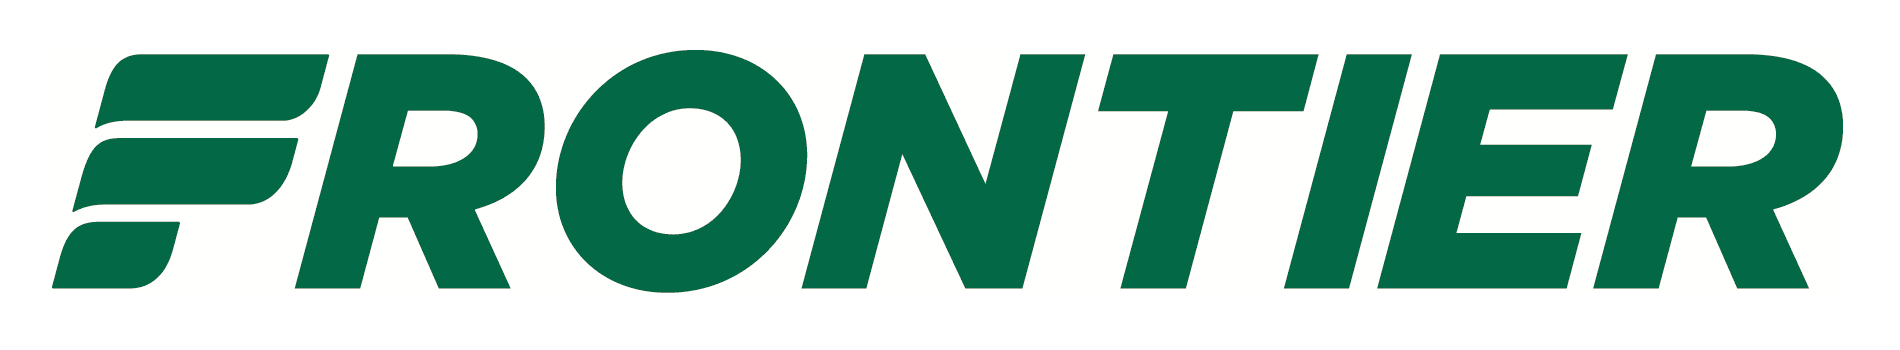 Frontier Logo - Frontier Airlines – Logos Download